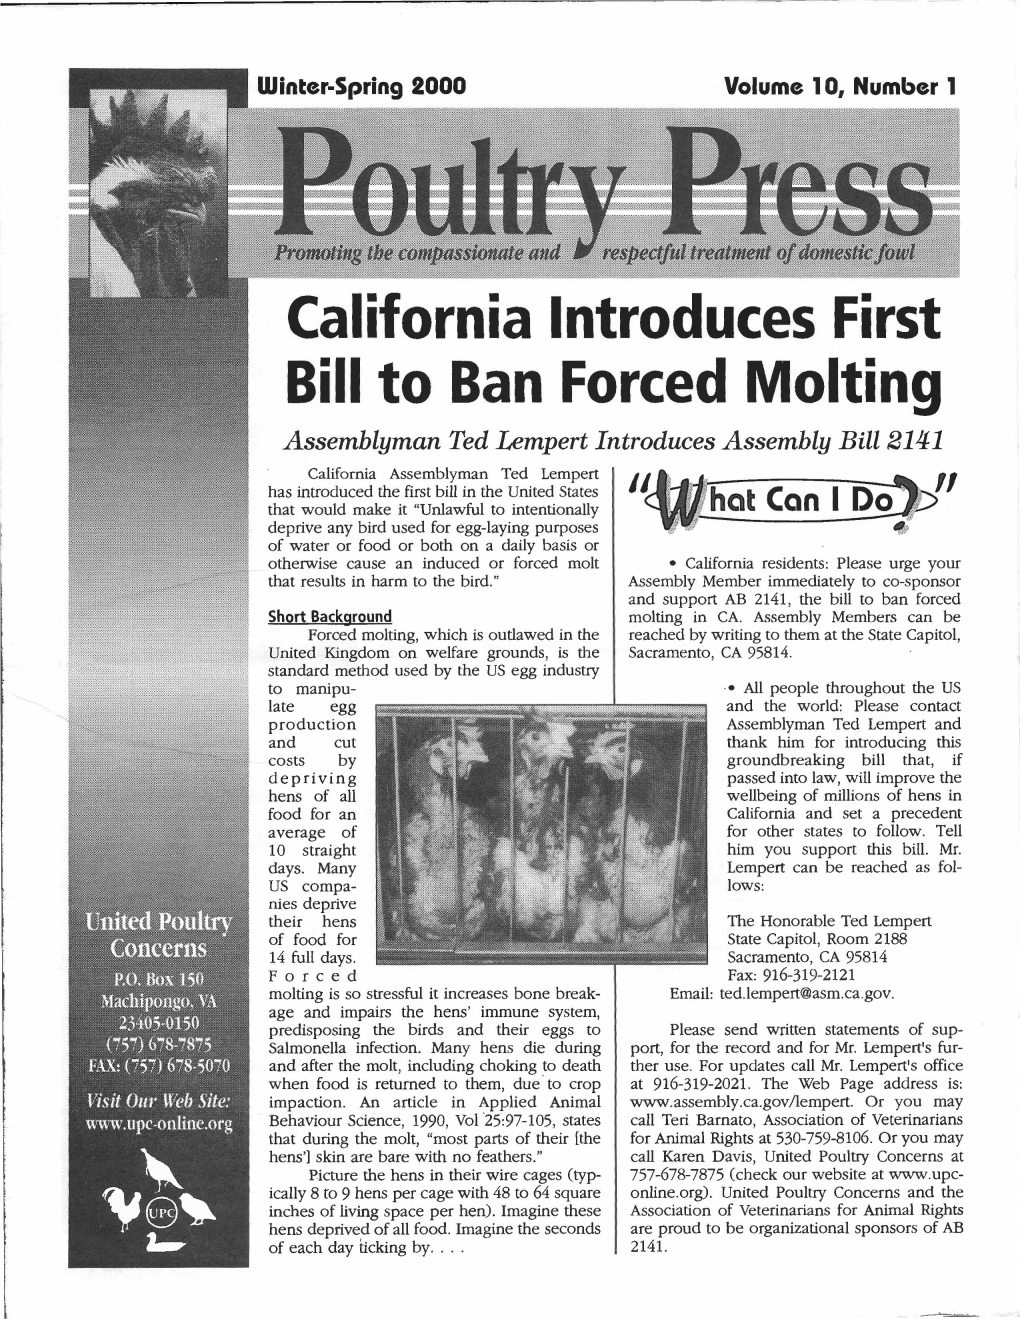 UPC Winter-Spring 2000 Poultry Press